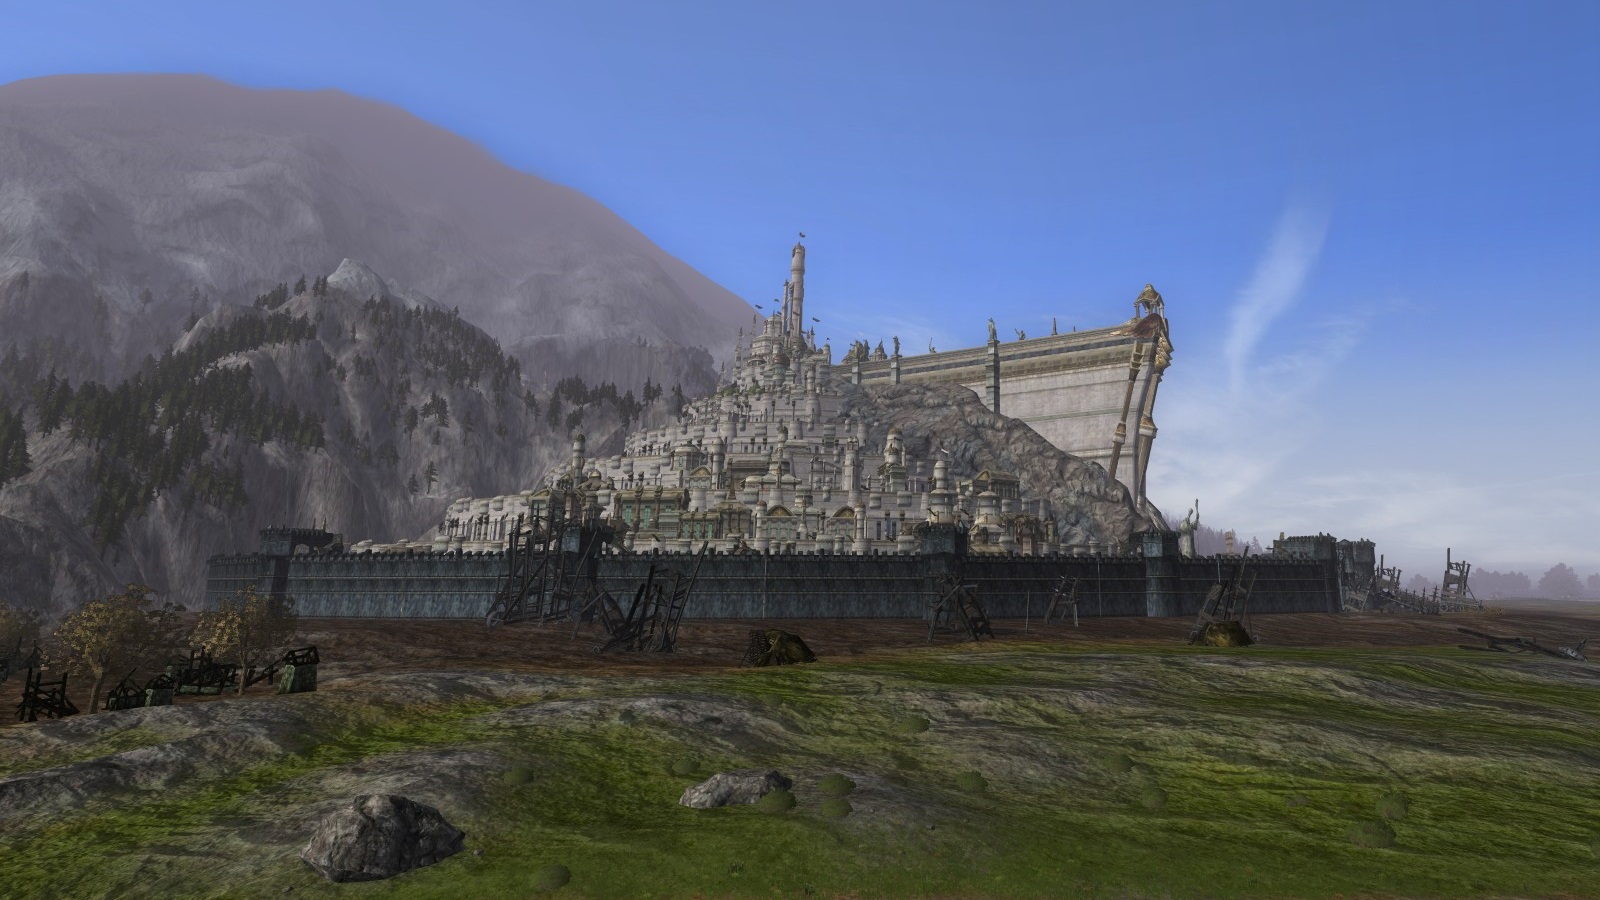 Minas Tirith (After-battle) 